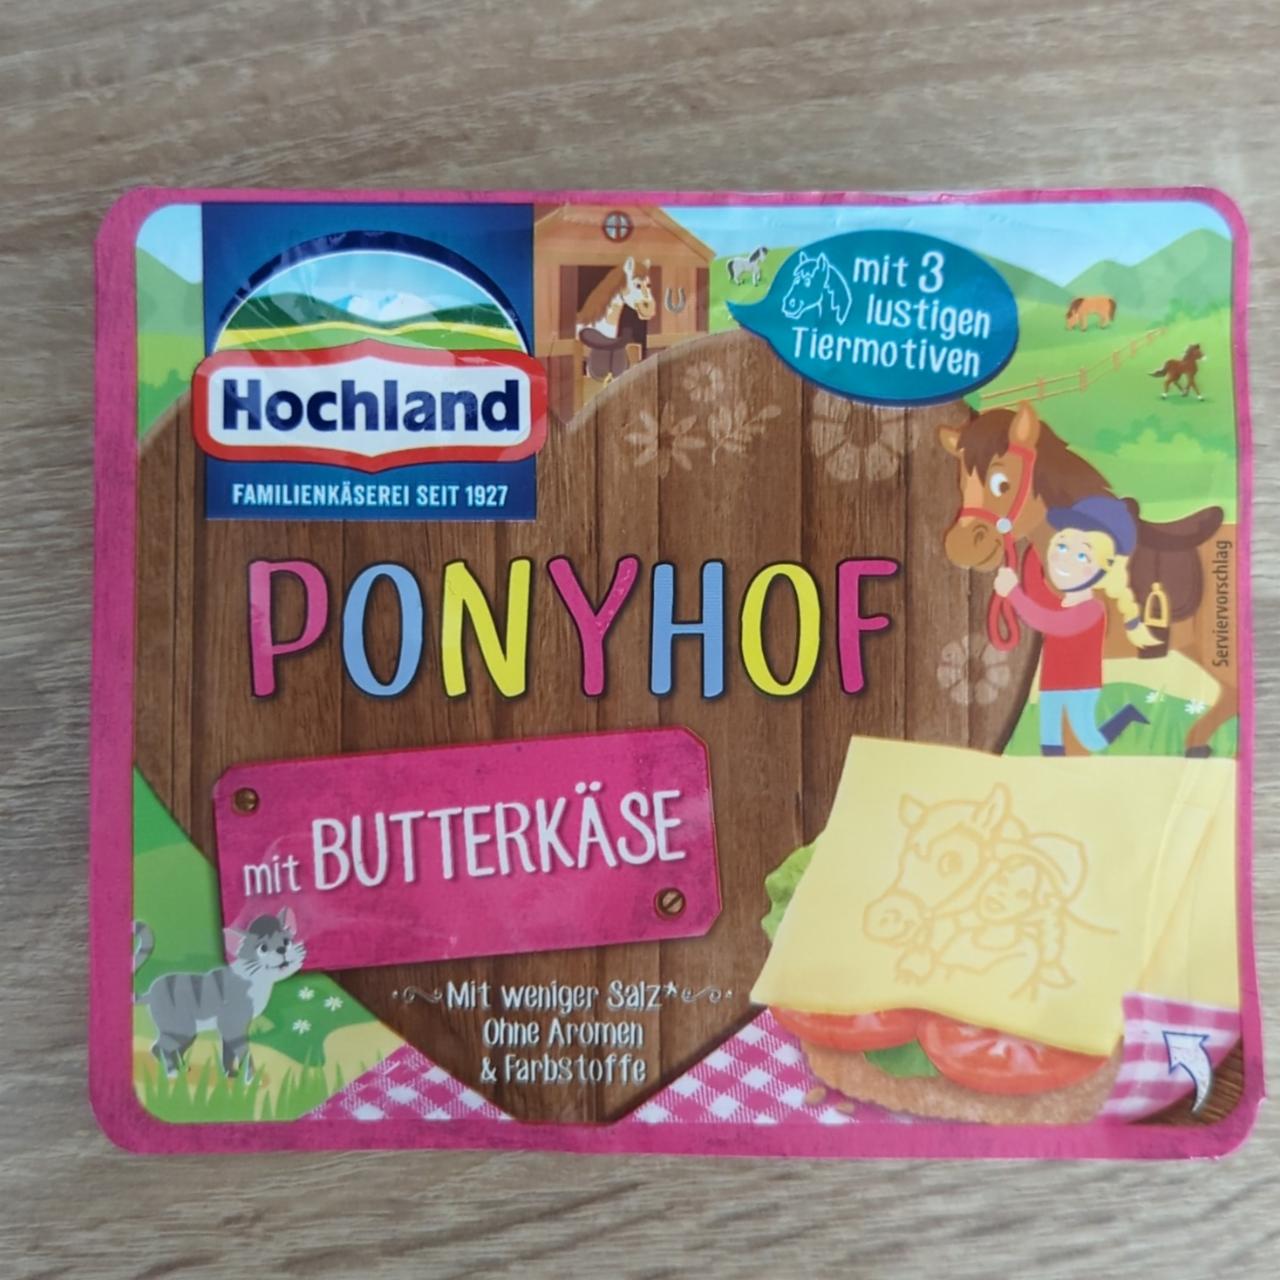 Фото - Ponyhof mit Butterkäse Hochland